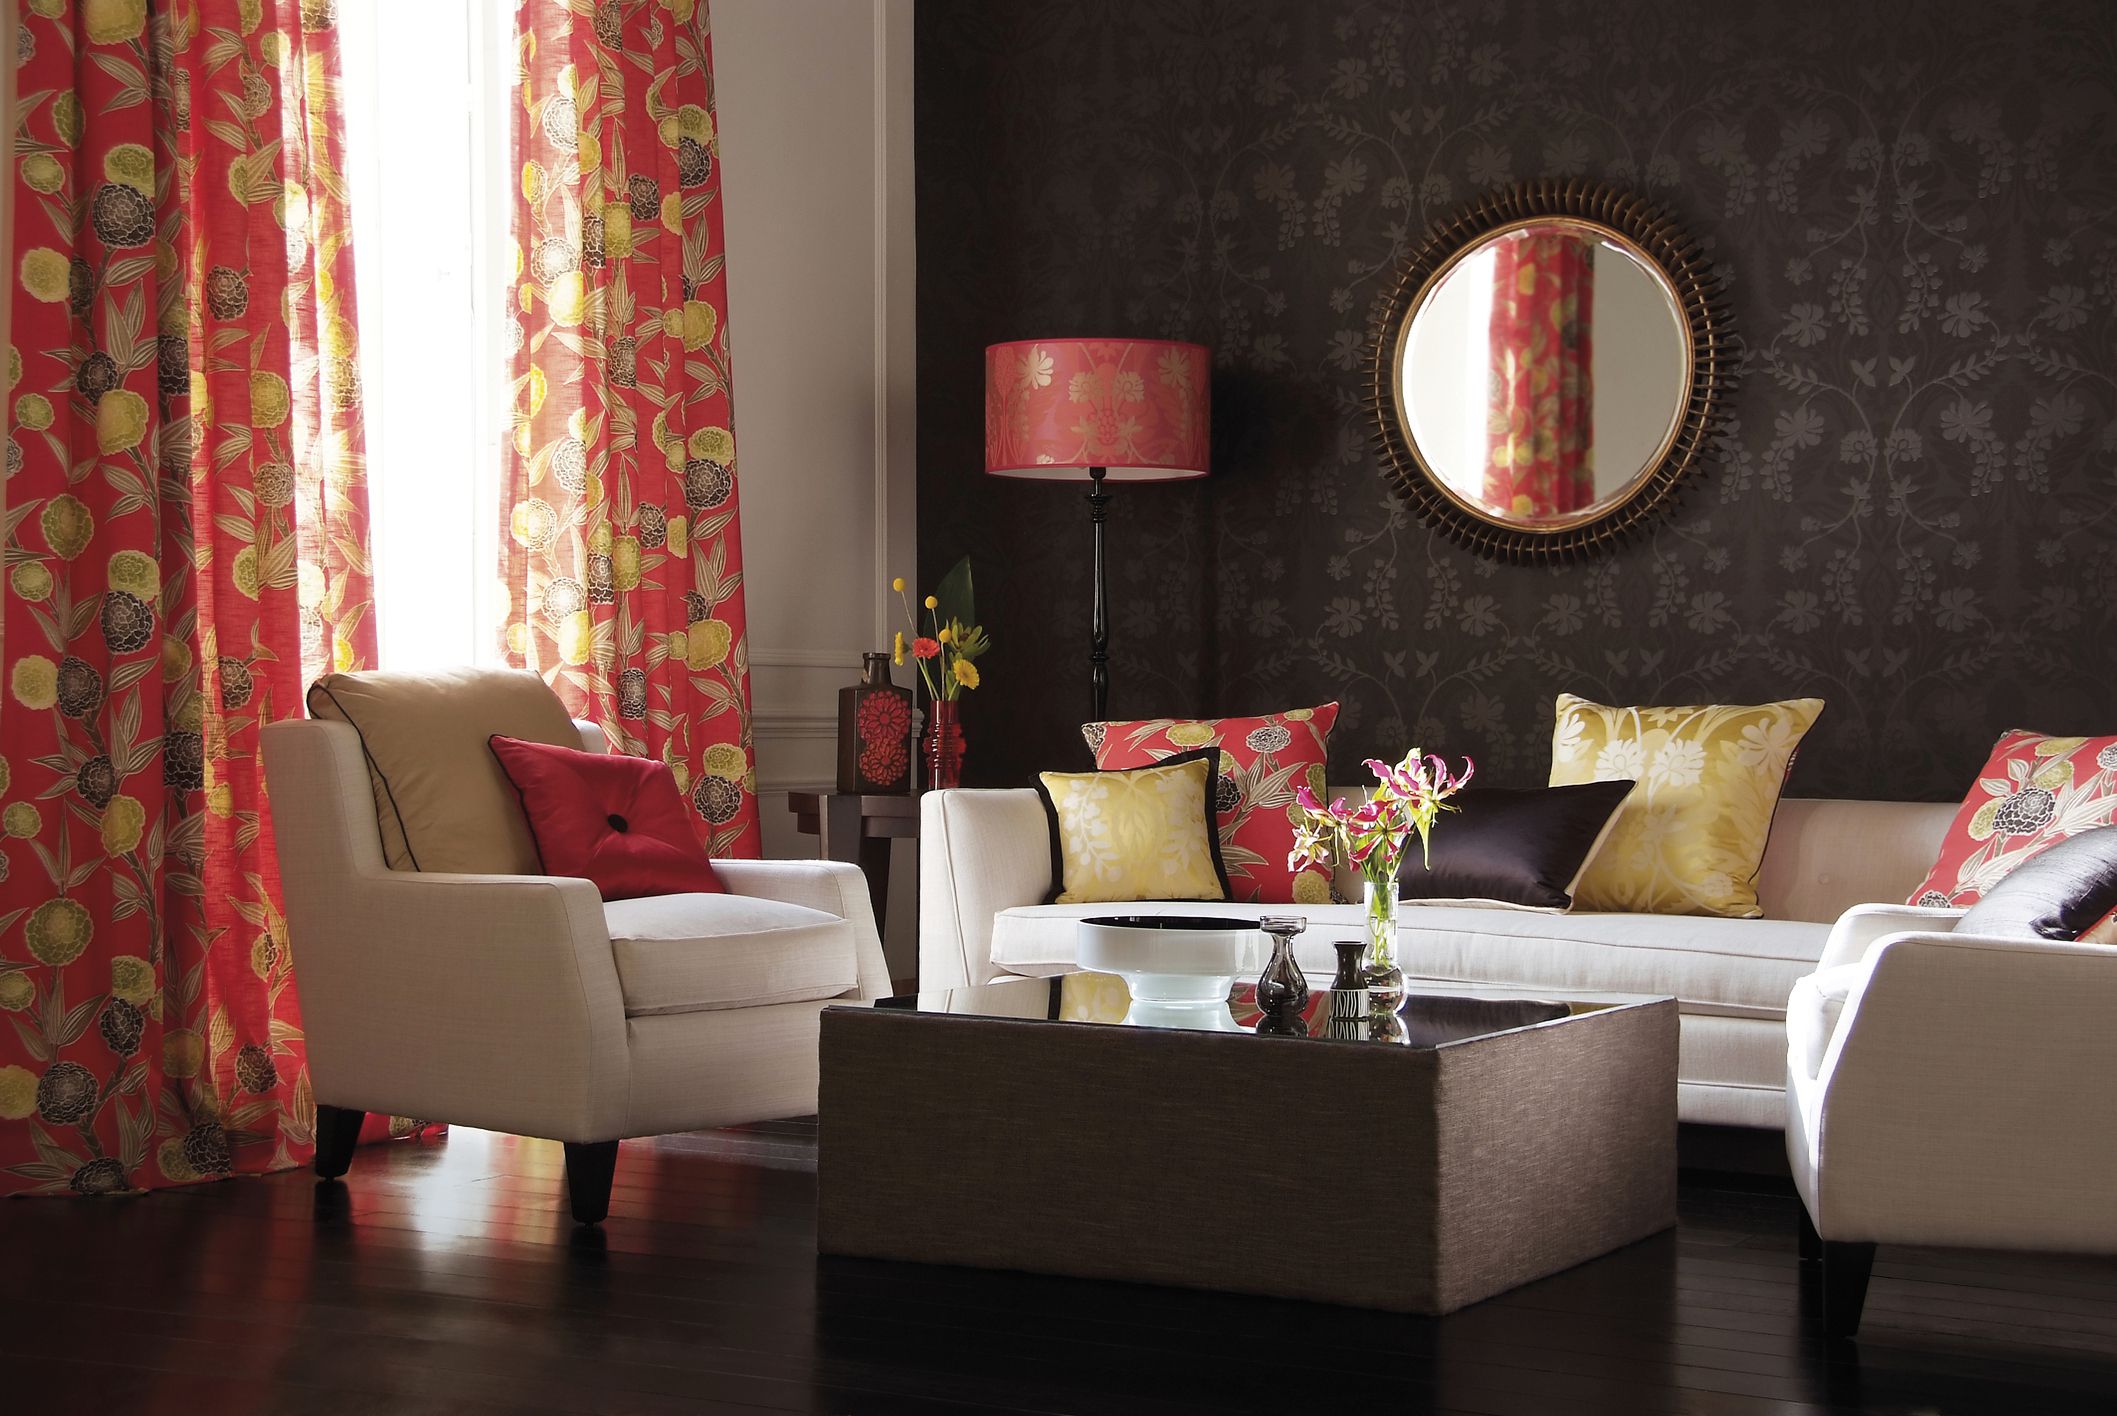 ideas for covering wallpaper,living room,room,interior design,curtain,furniture